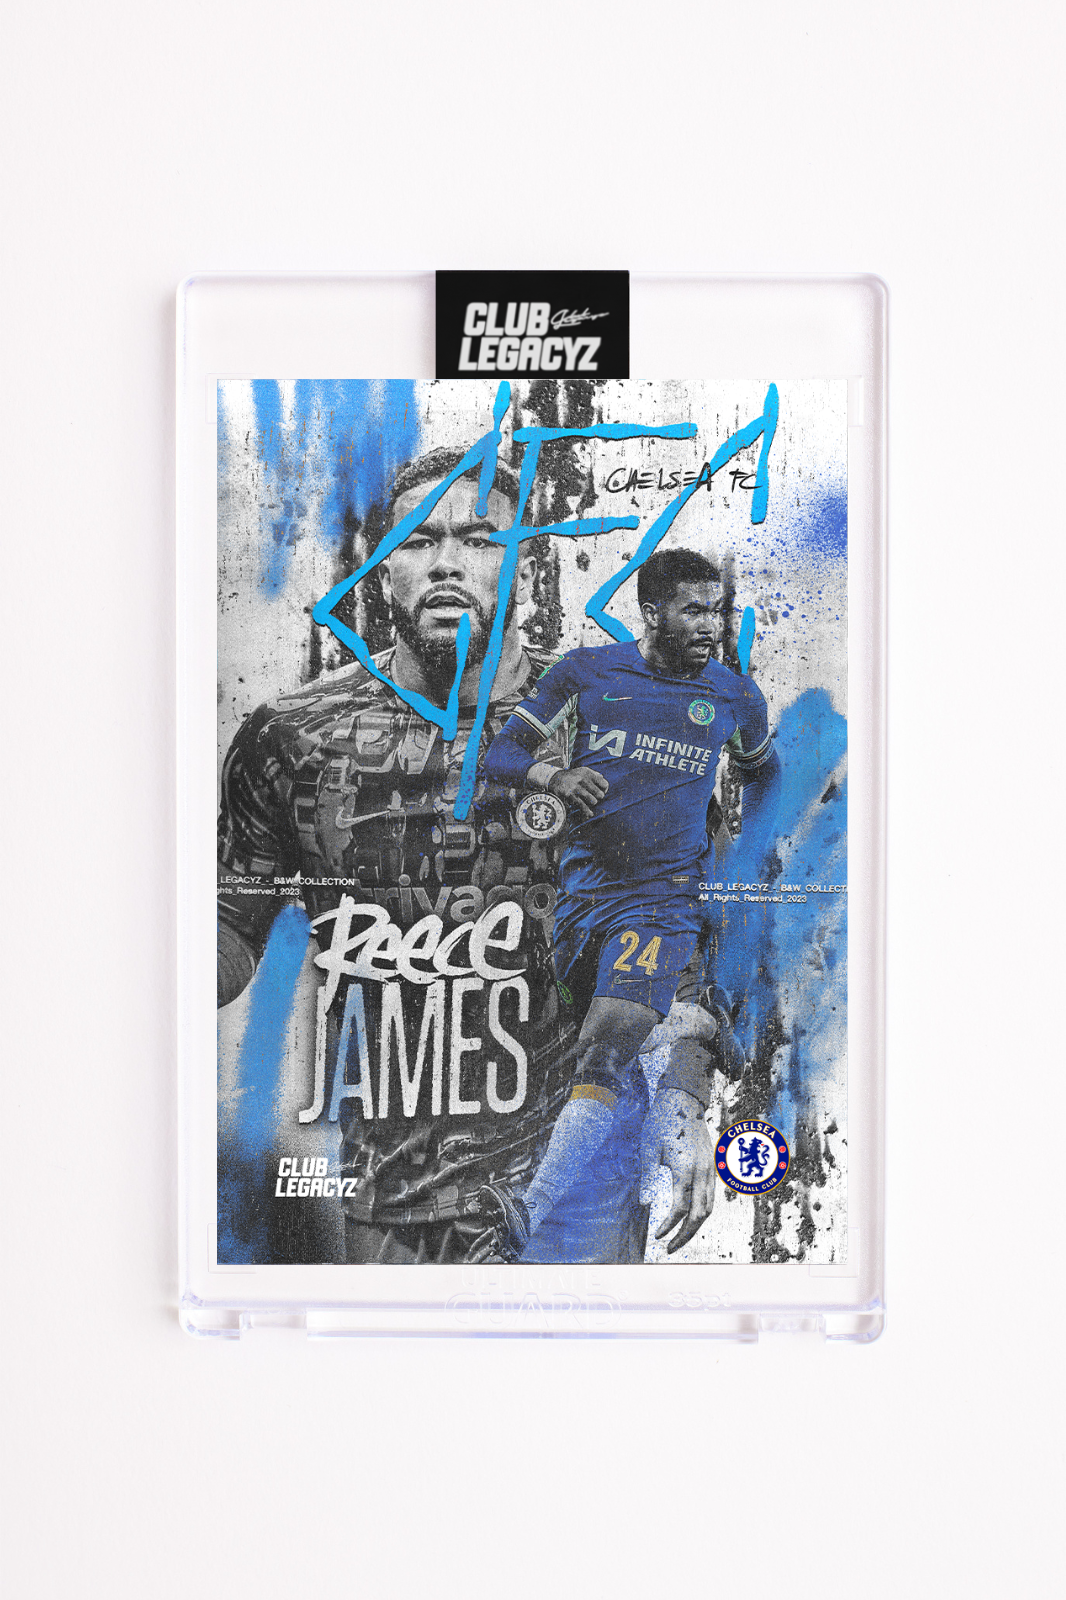 Chelsea FC - Icon Black & White Reece James 100 exemplaires